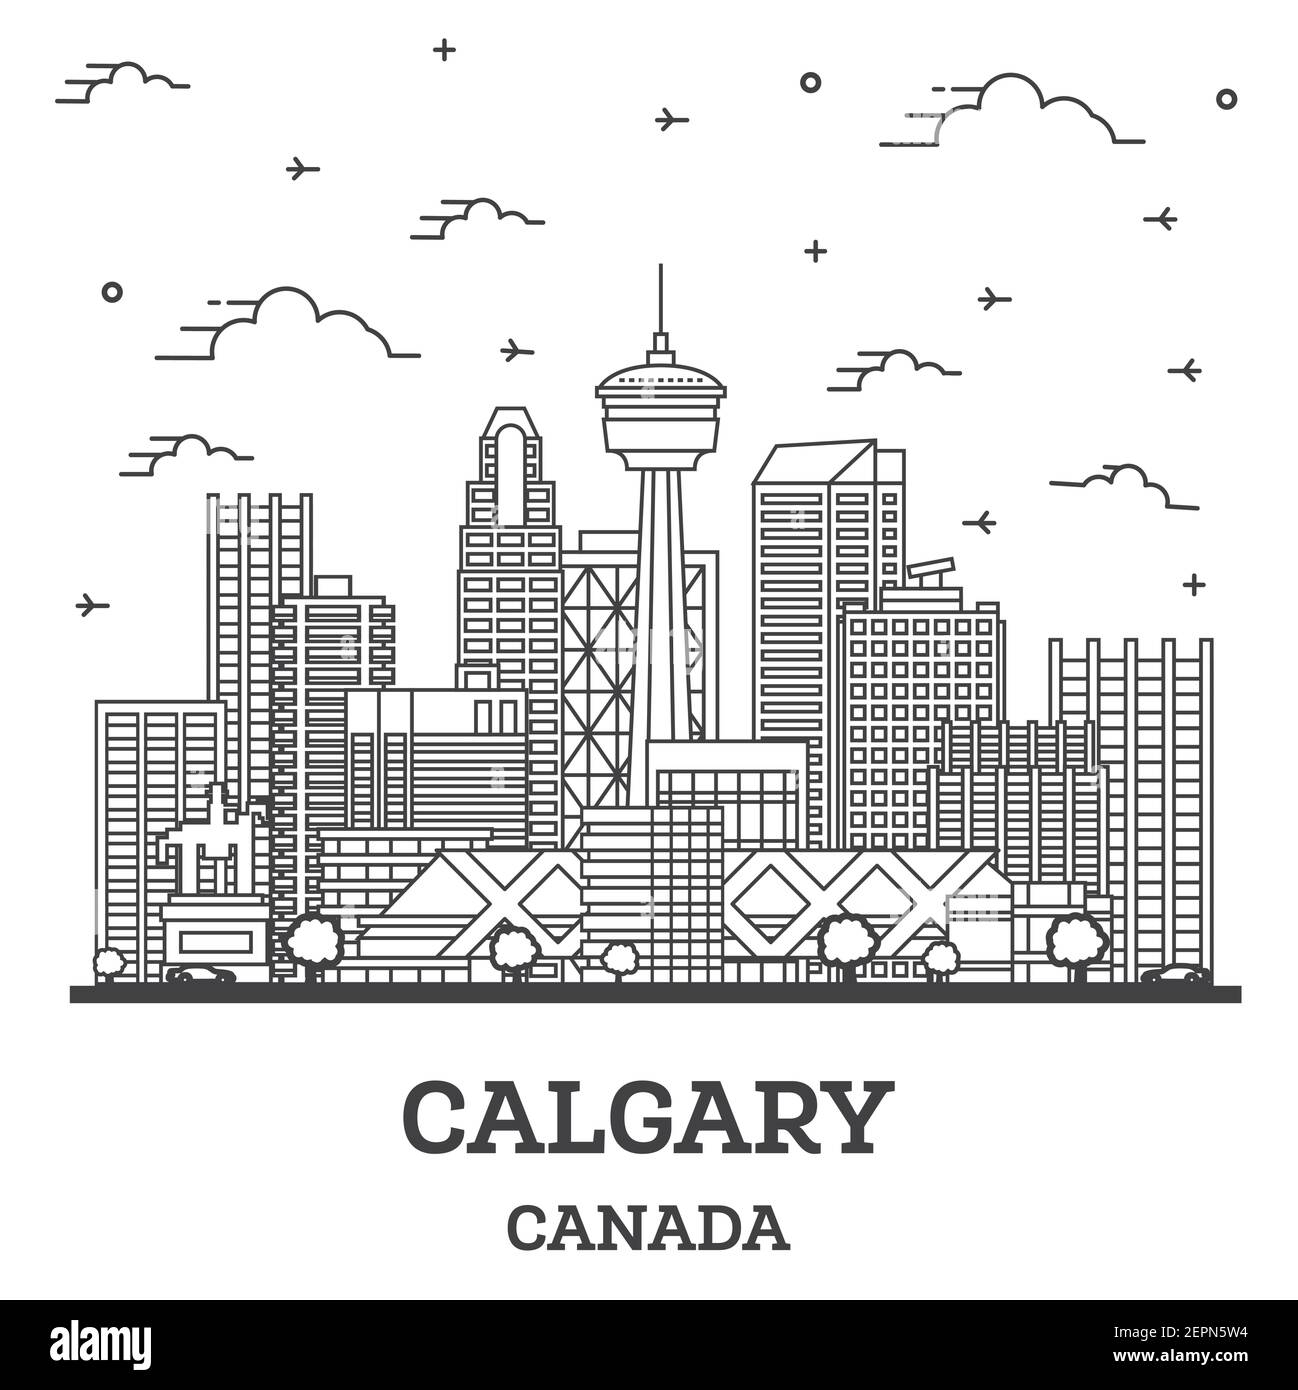 Outline Calgary Canada City Skyline with Modern Buildings Isolated on White. Vector Illustration. Calgary Cityscape with Landmarks. Stock Vector